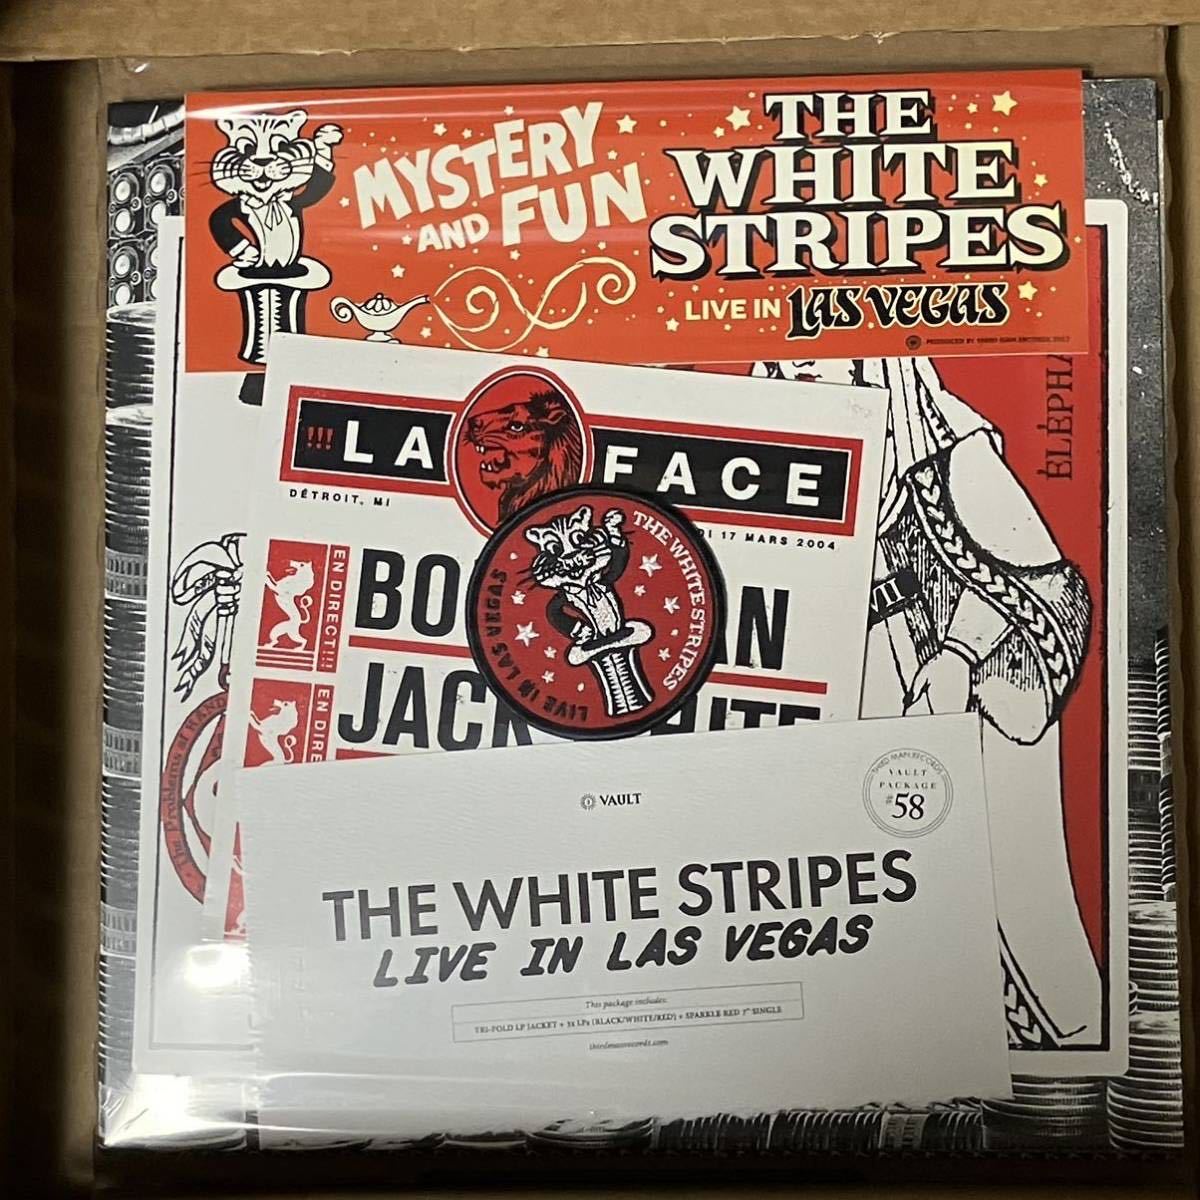 The White Stripes Live In Las Vegas 3LP+7インチ Vault #58 third man records jack white bob dylan_画像3